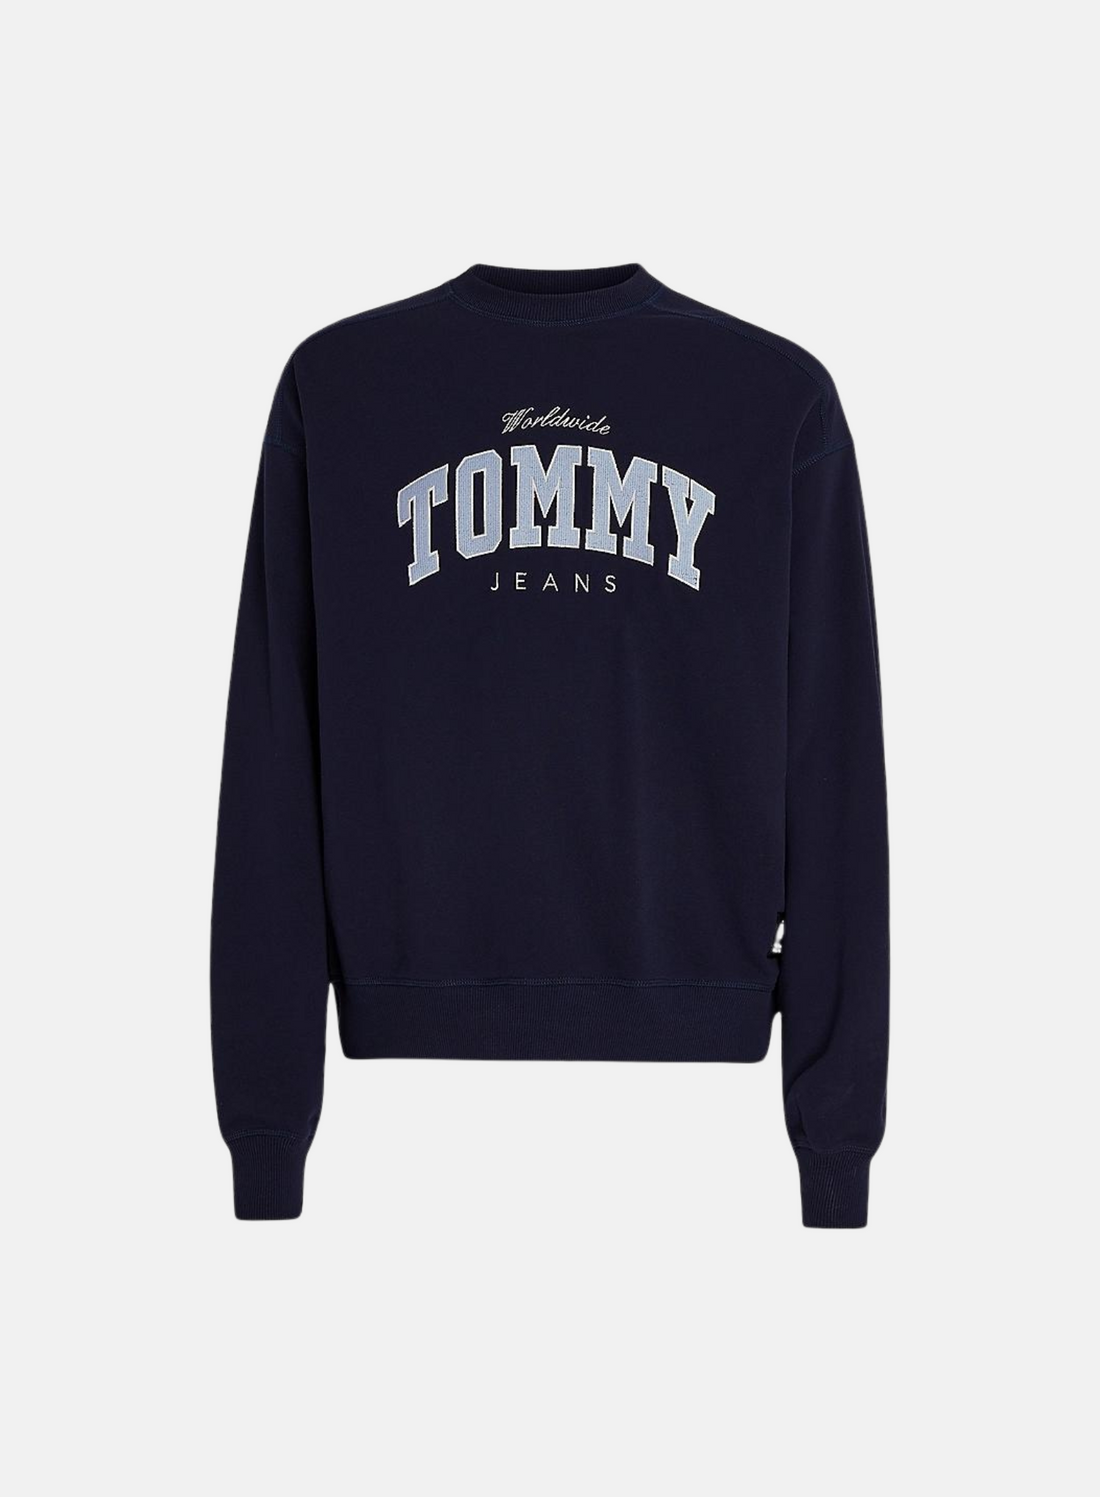 Tommy Jeans Boxy Varsity Sweatshirt Navy - Hympala Store 